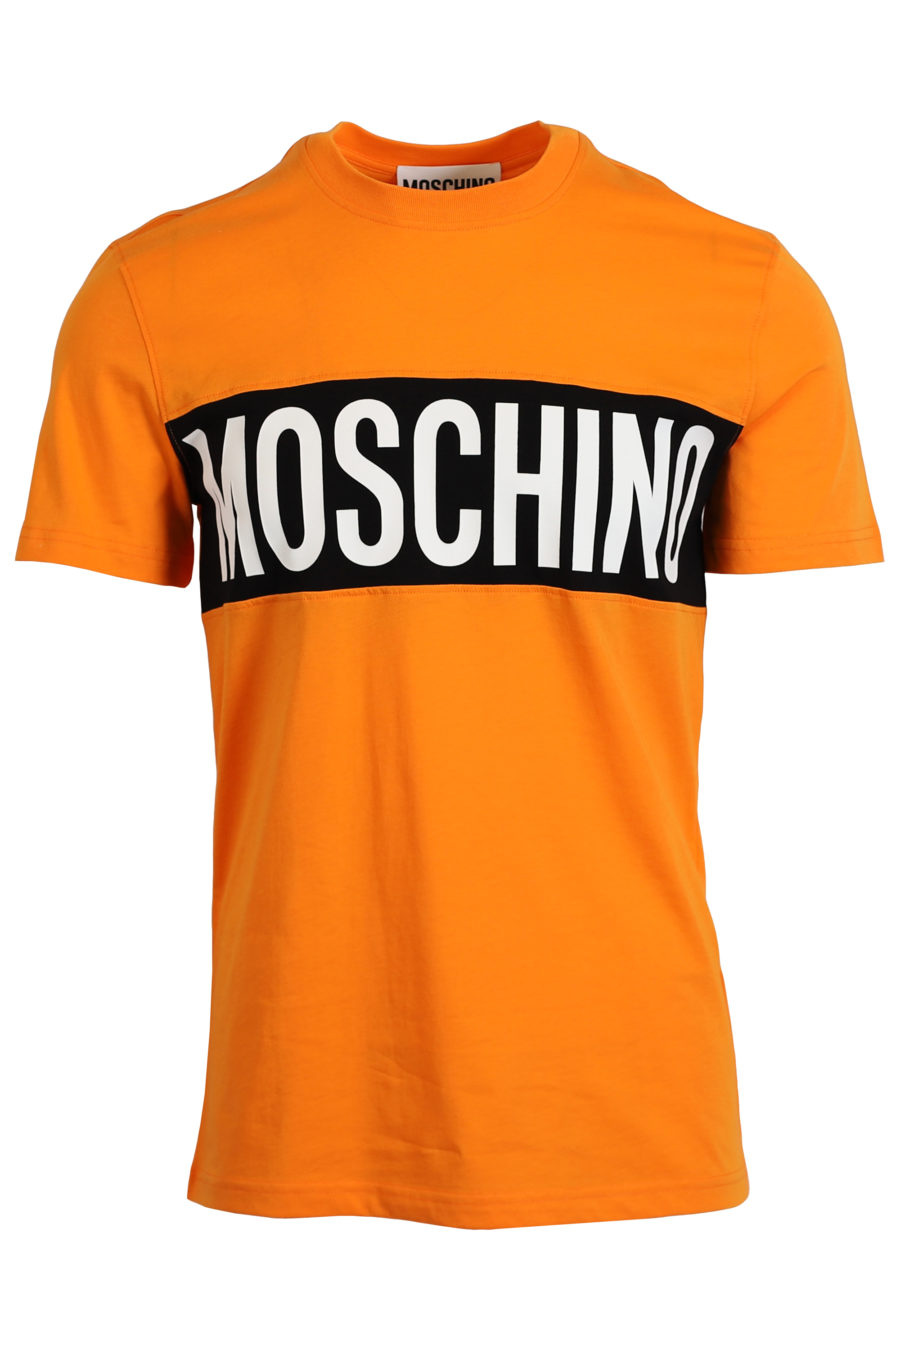 T-shirt orange logo noir et blanc - IMG 0985